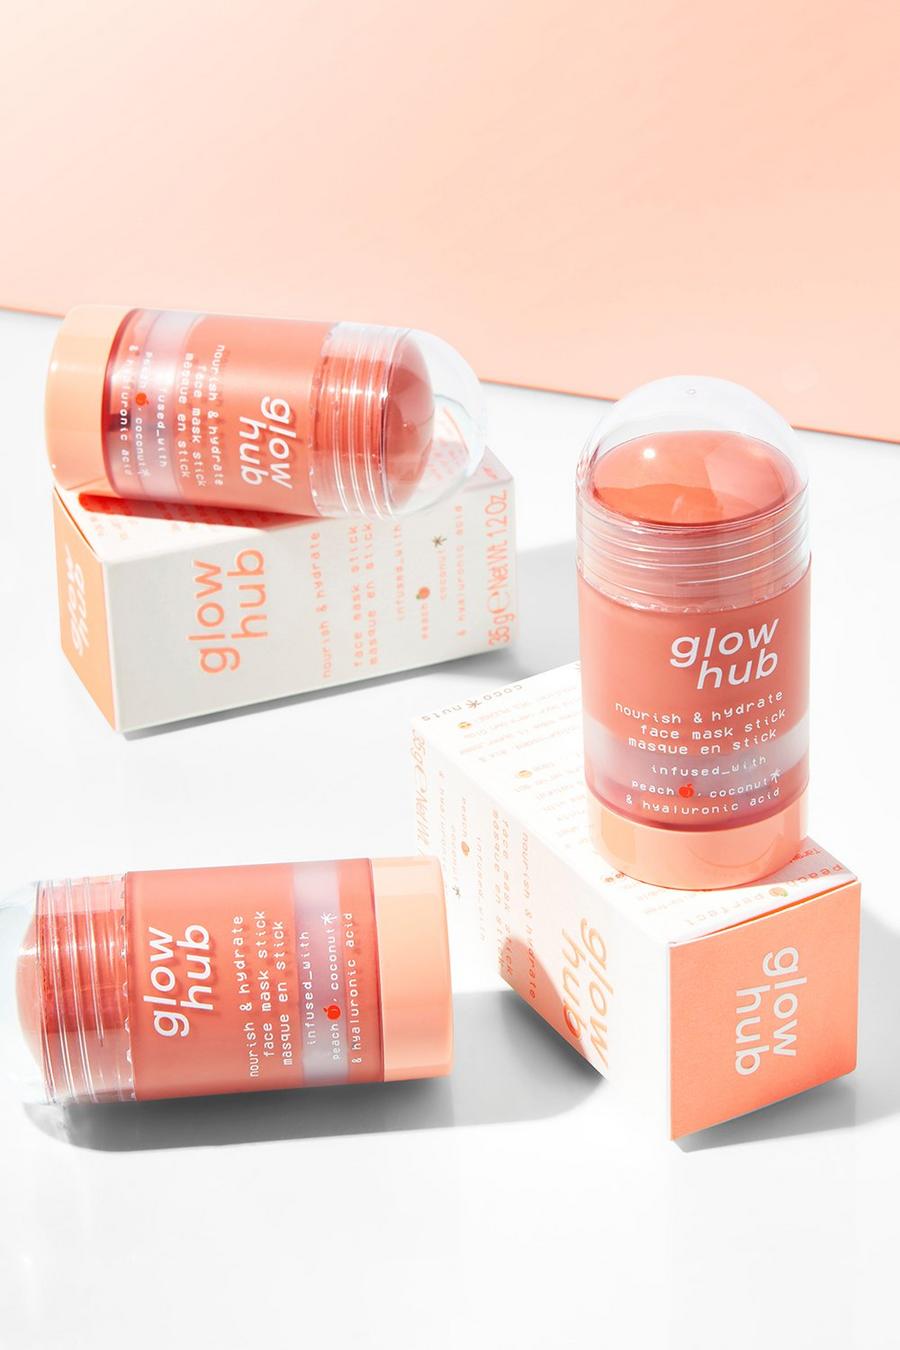 Orange Glow Hub nourish & hydrate face mask stick